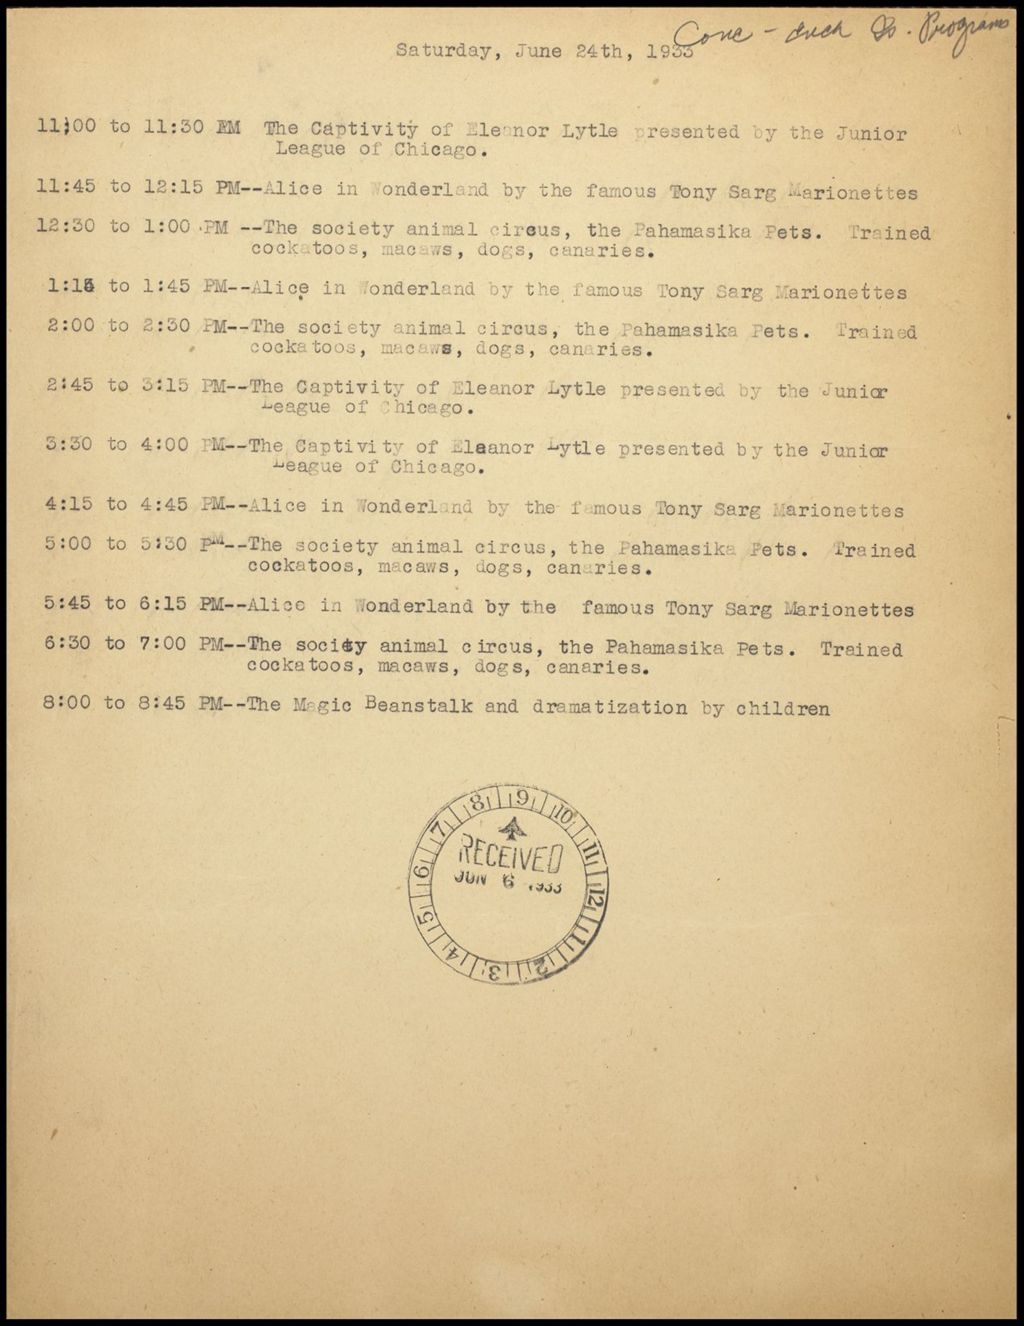 Enchanted Island - Programs, 1933 (Folder 12-51)